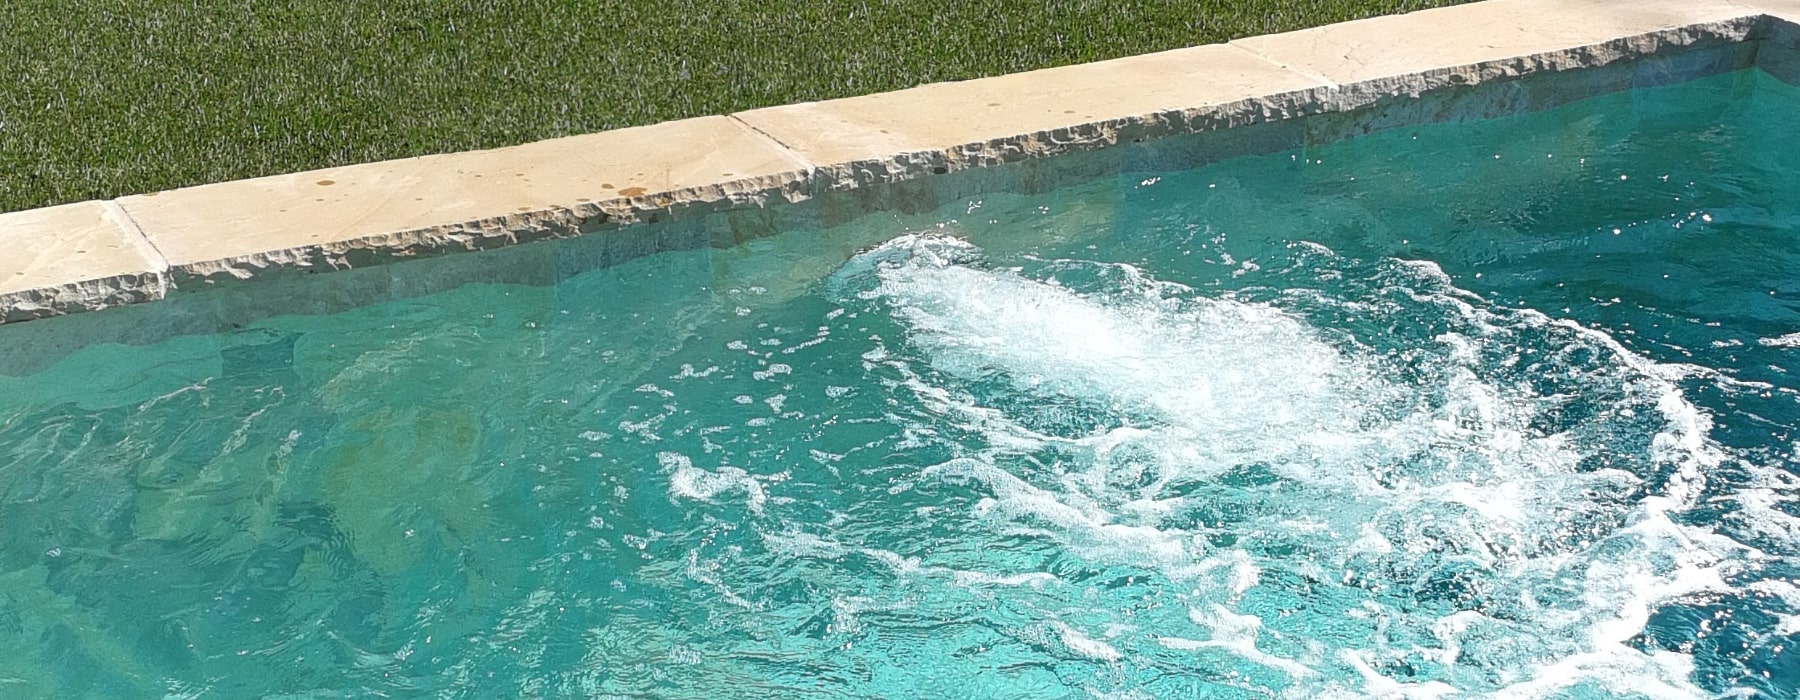 Realizzazione piscine sportive in Toscana by Gardenpool